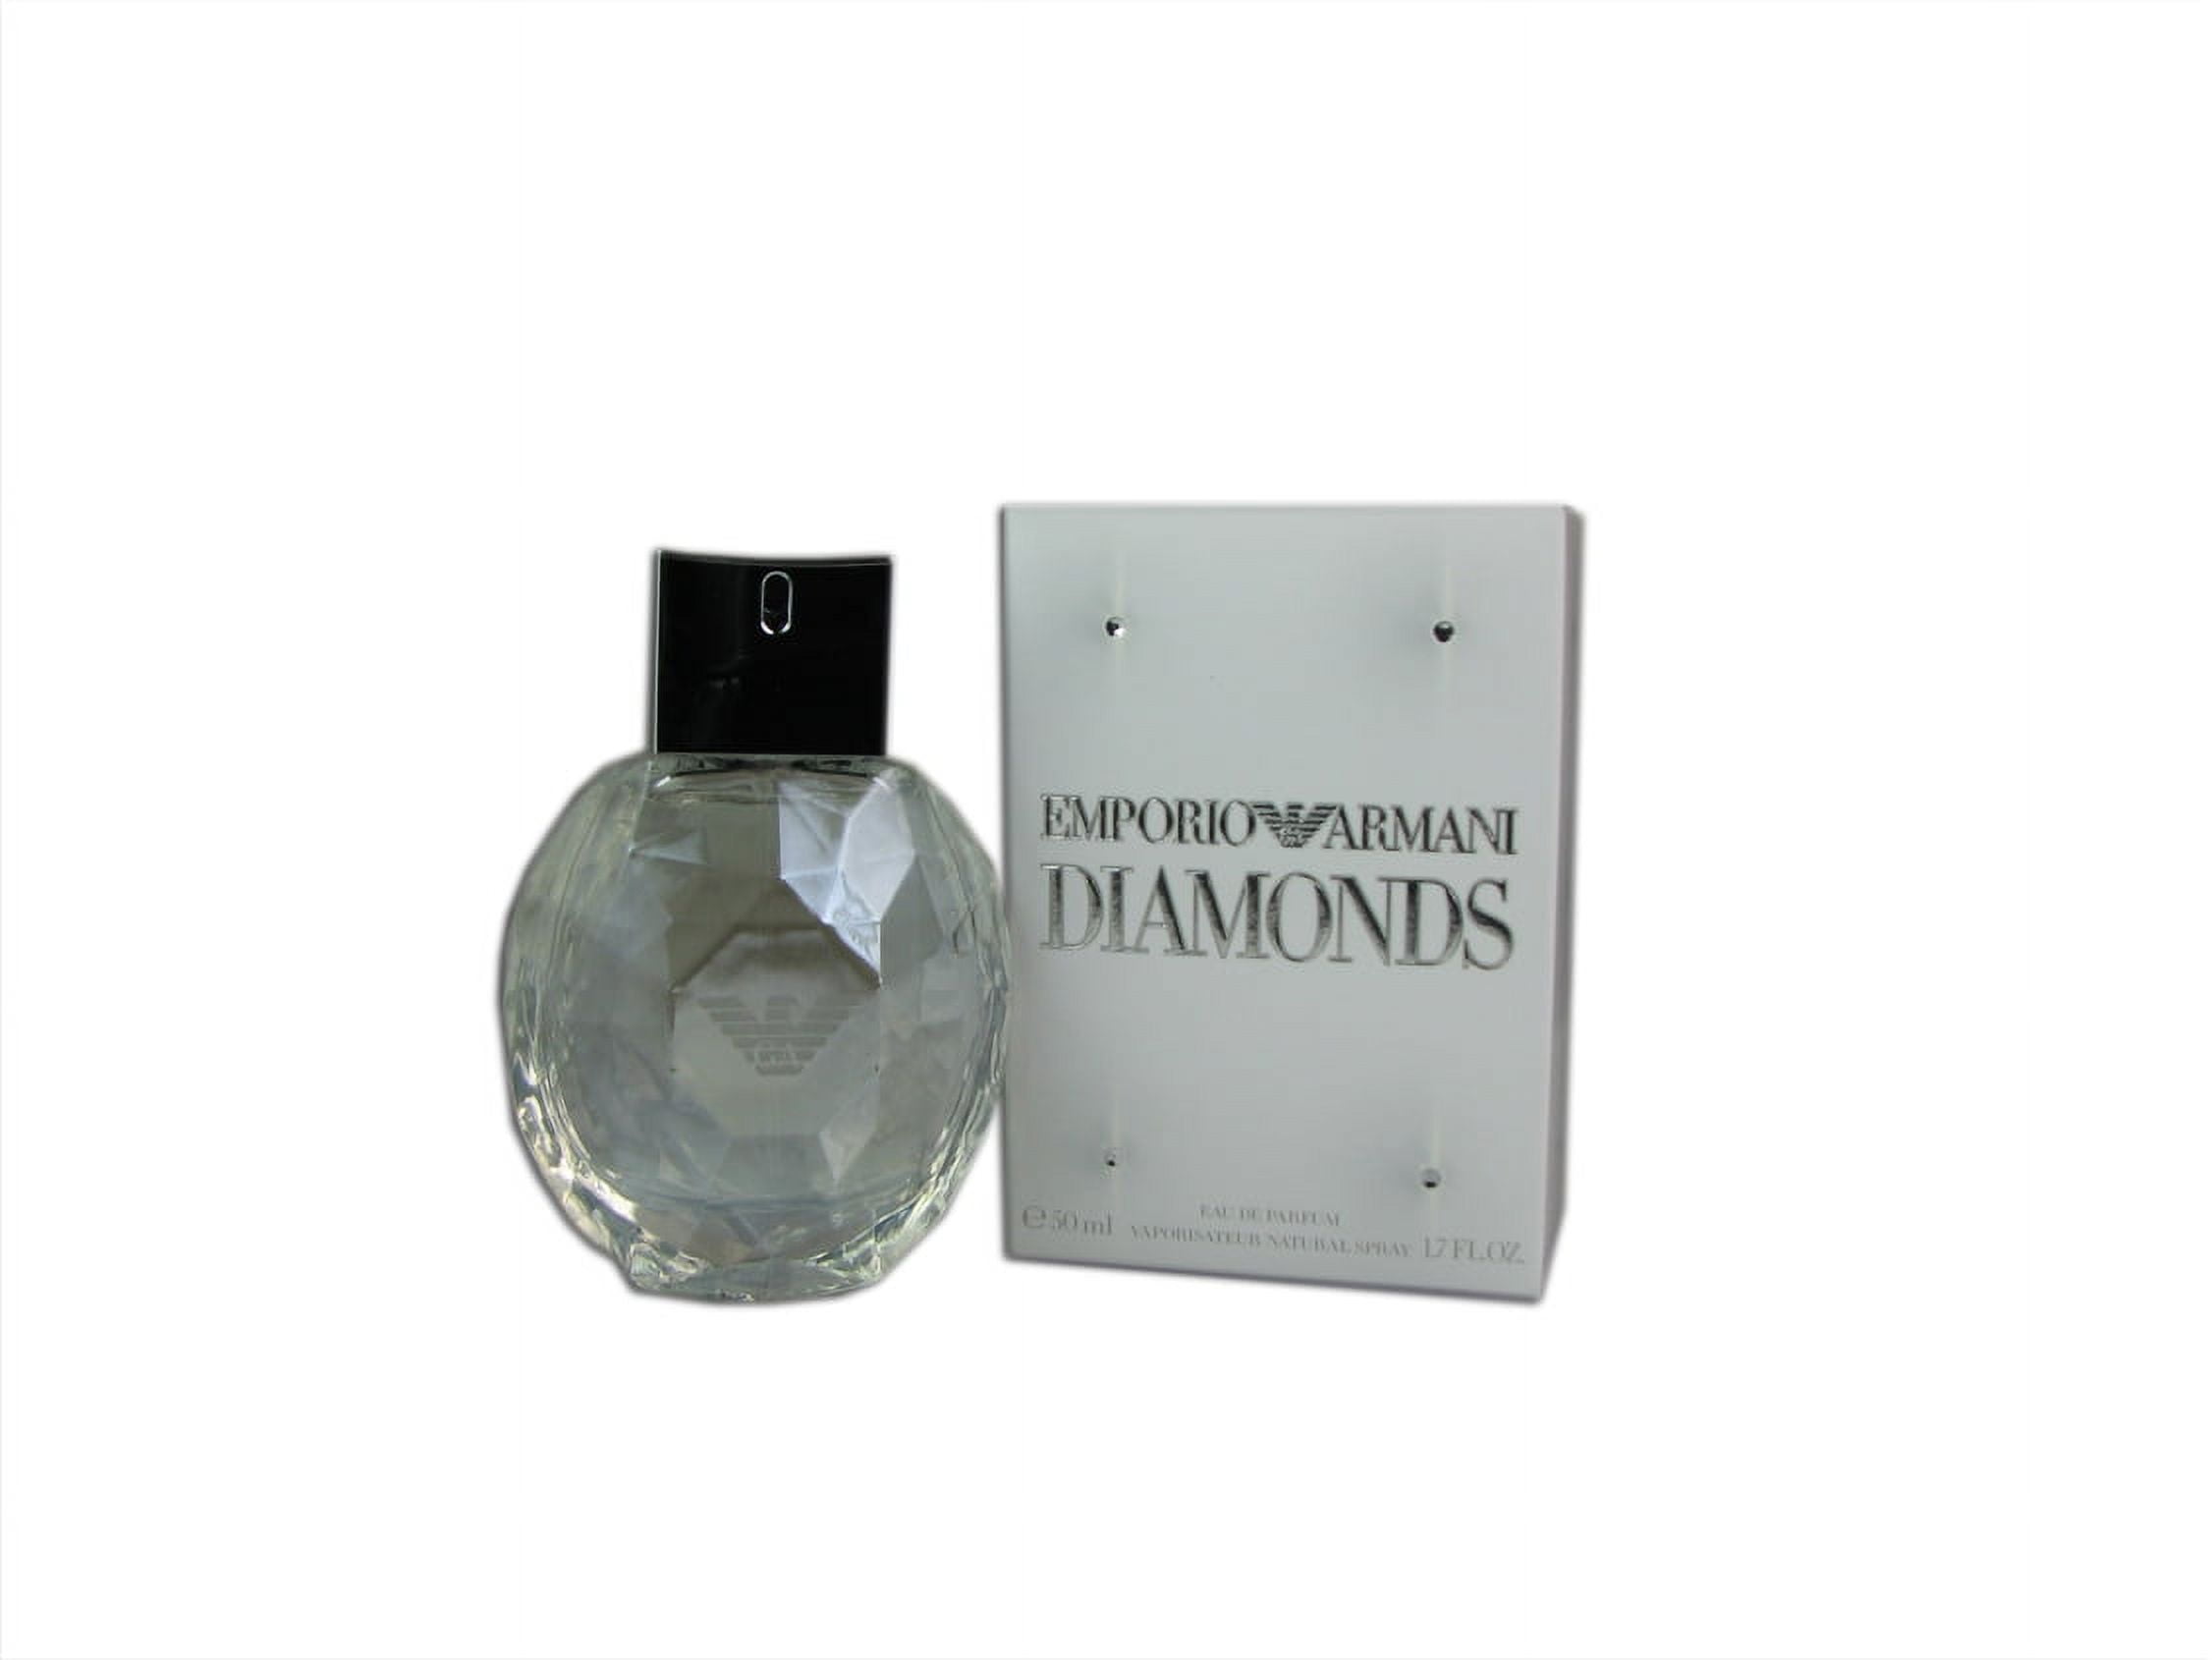 Giorgio Armani Emporio Armani Diamonds Eau De Parfum Spray for Women 1.7 oz